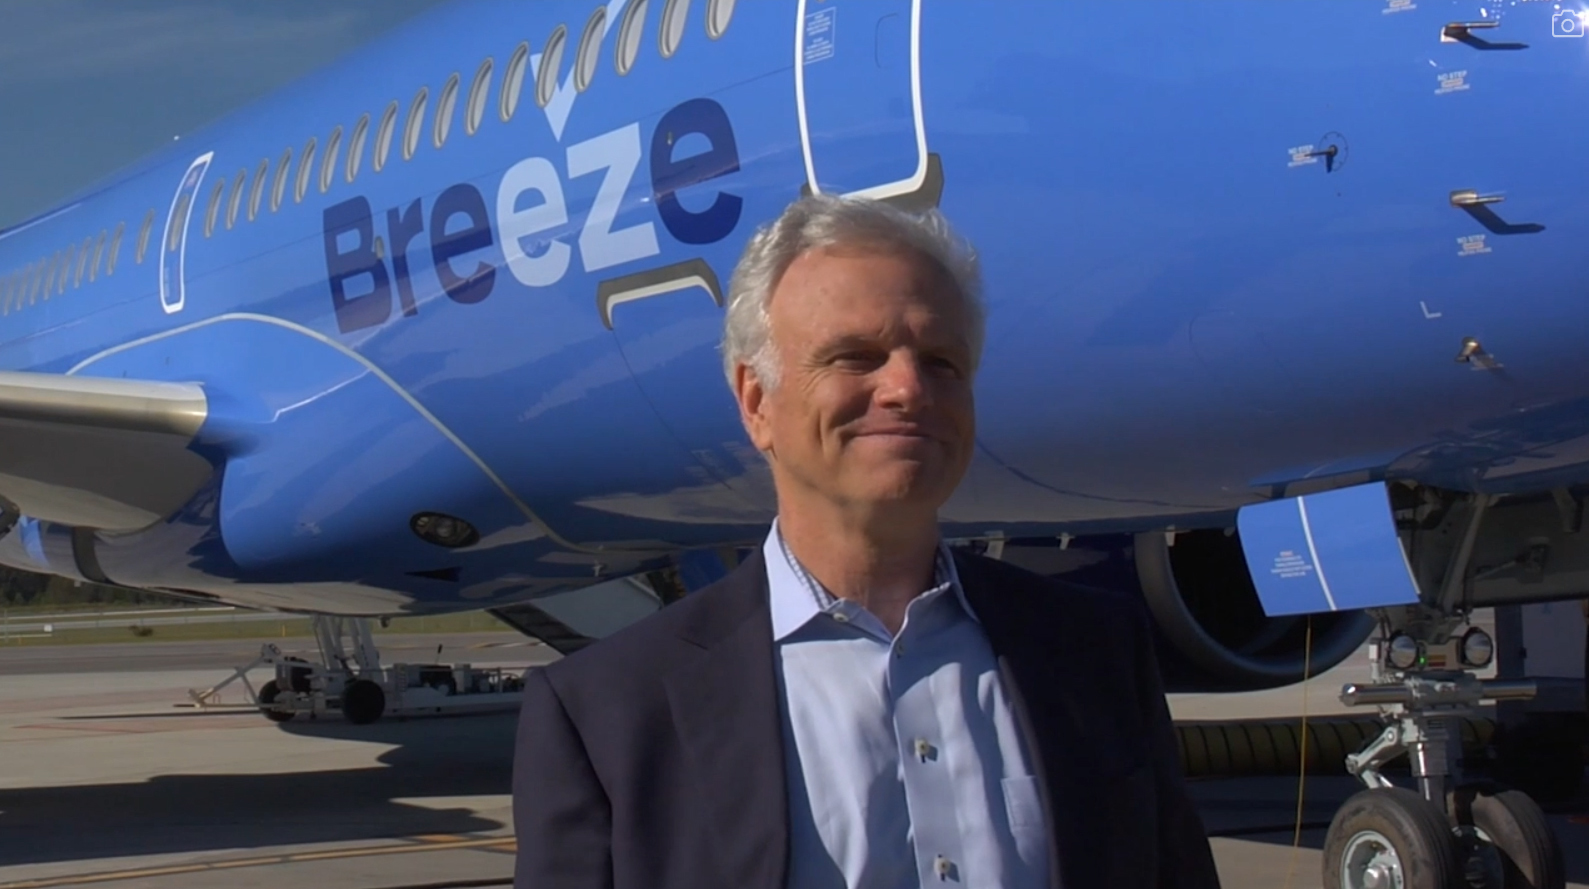 Breeze Airways’ Chairman and CEO David Neeleman